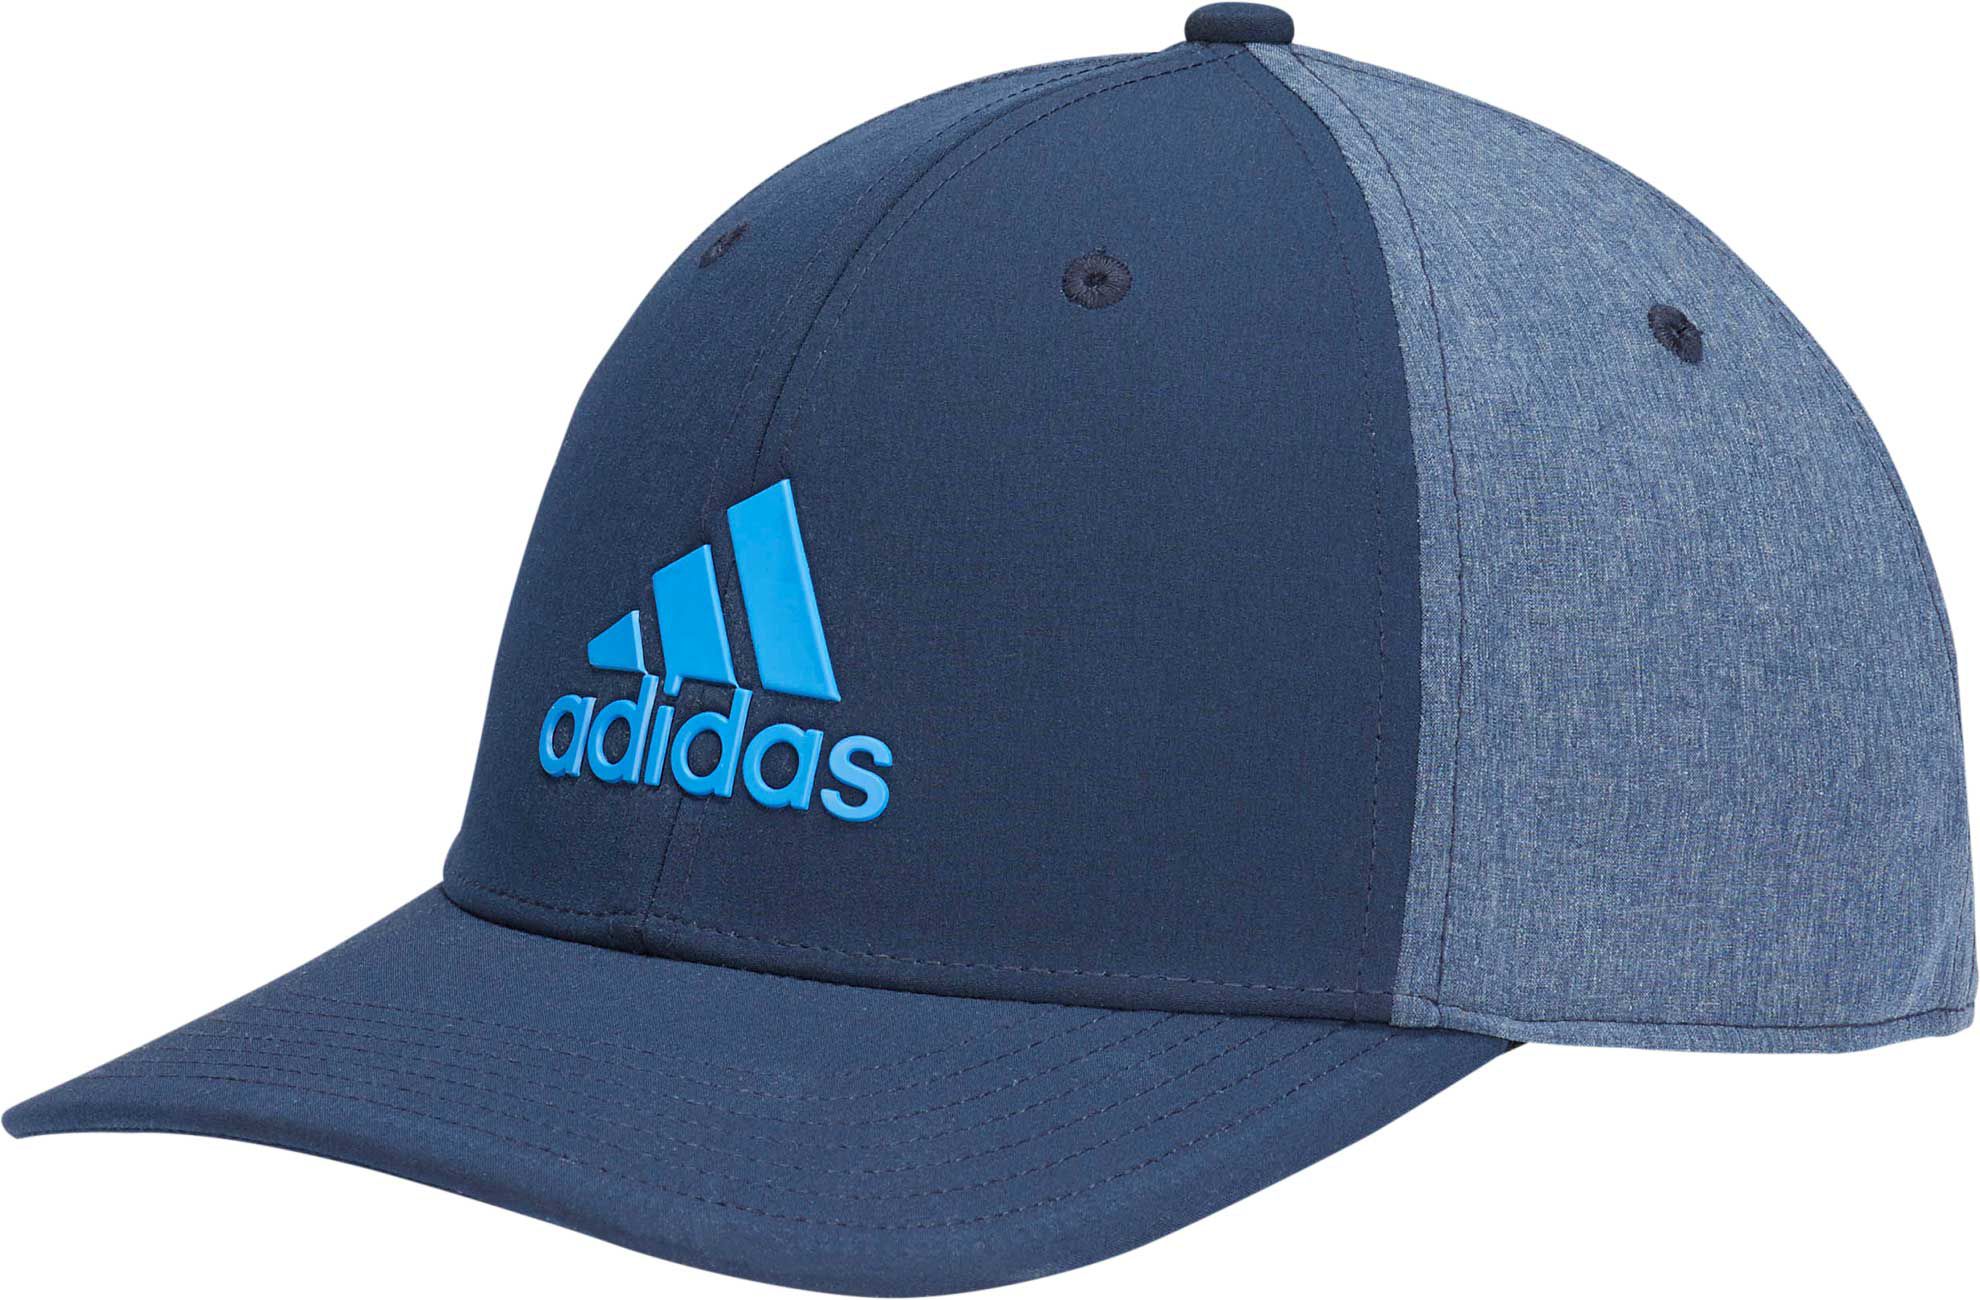 adidas heathered snapback hat